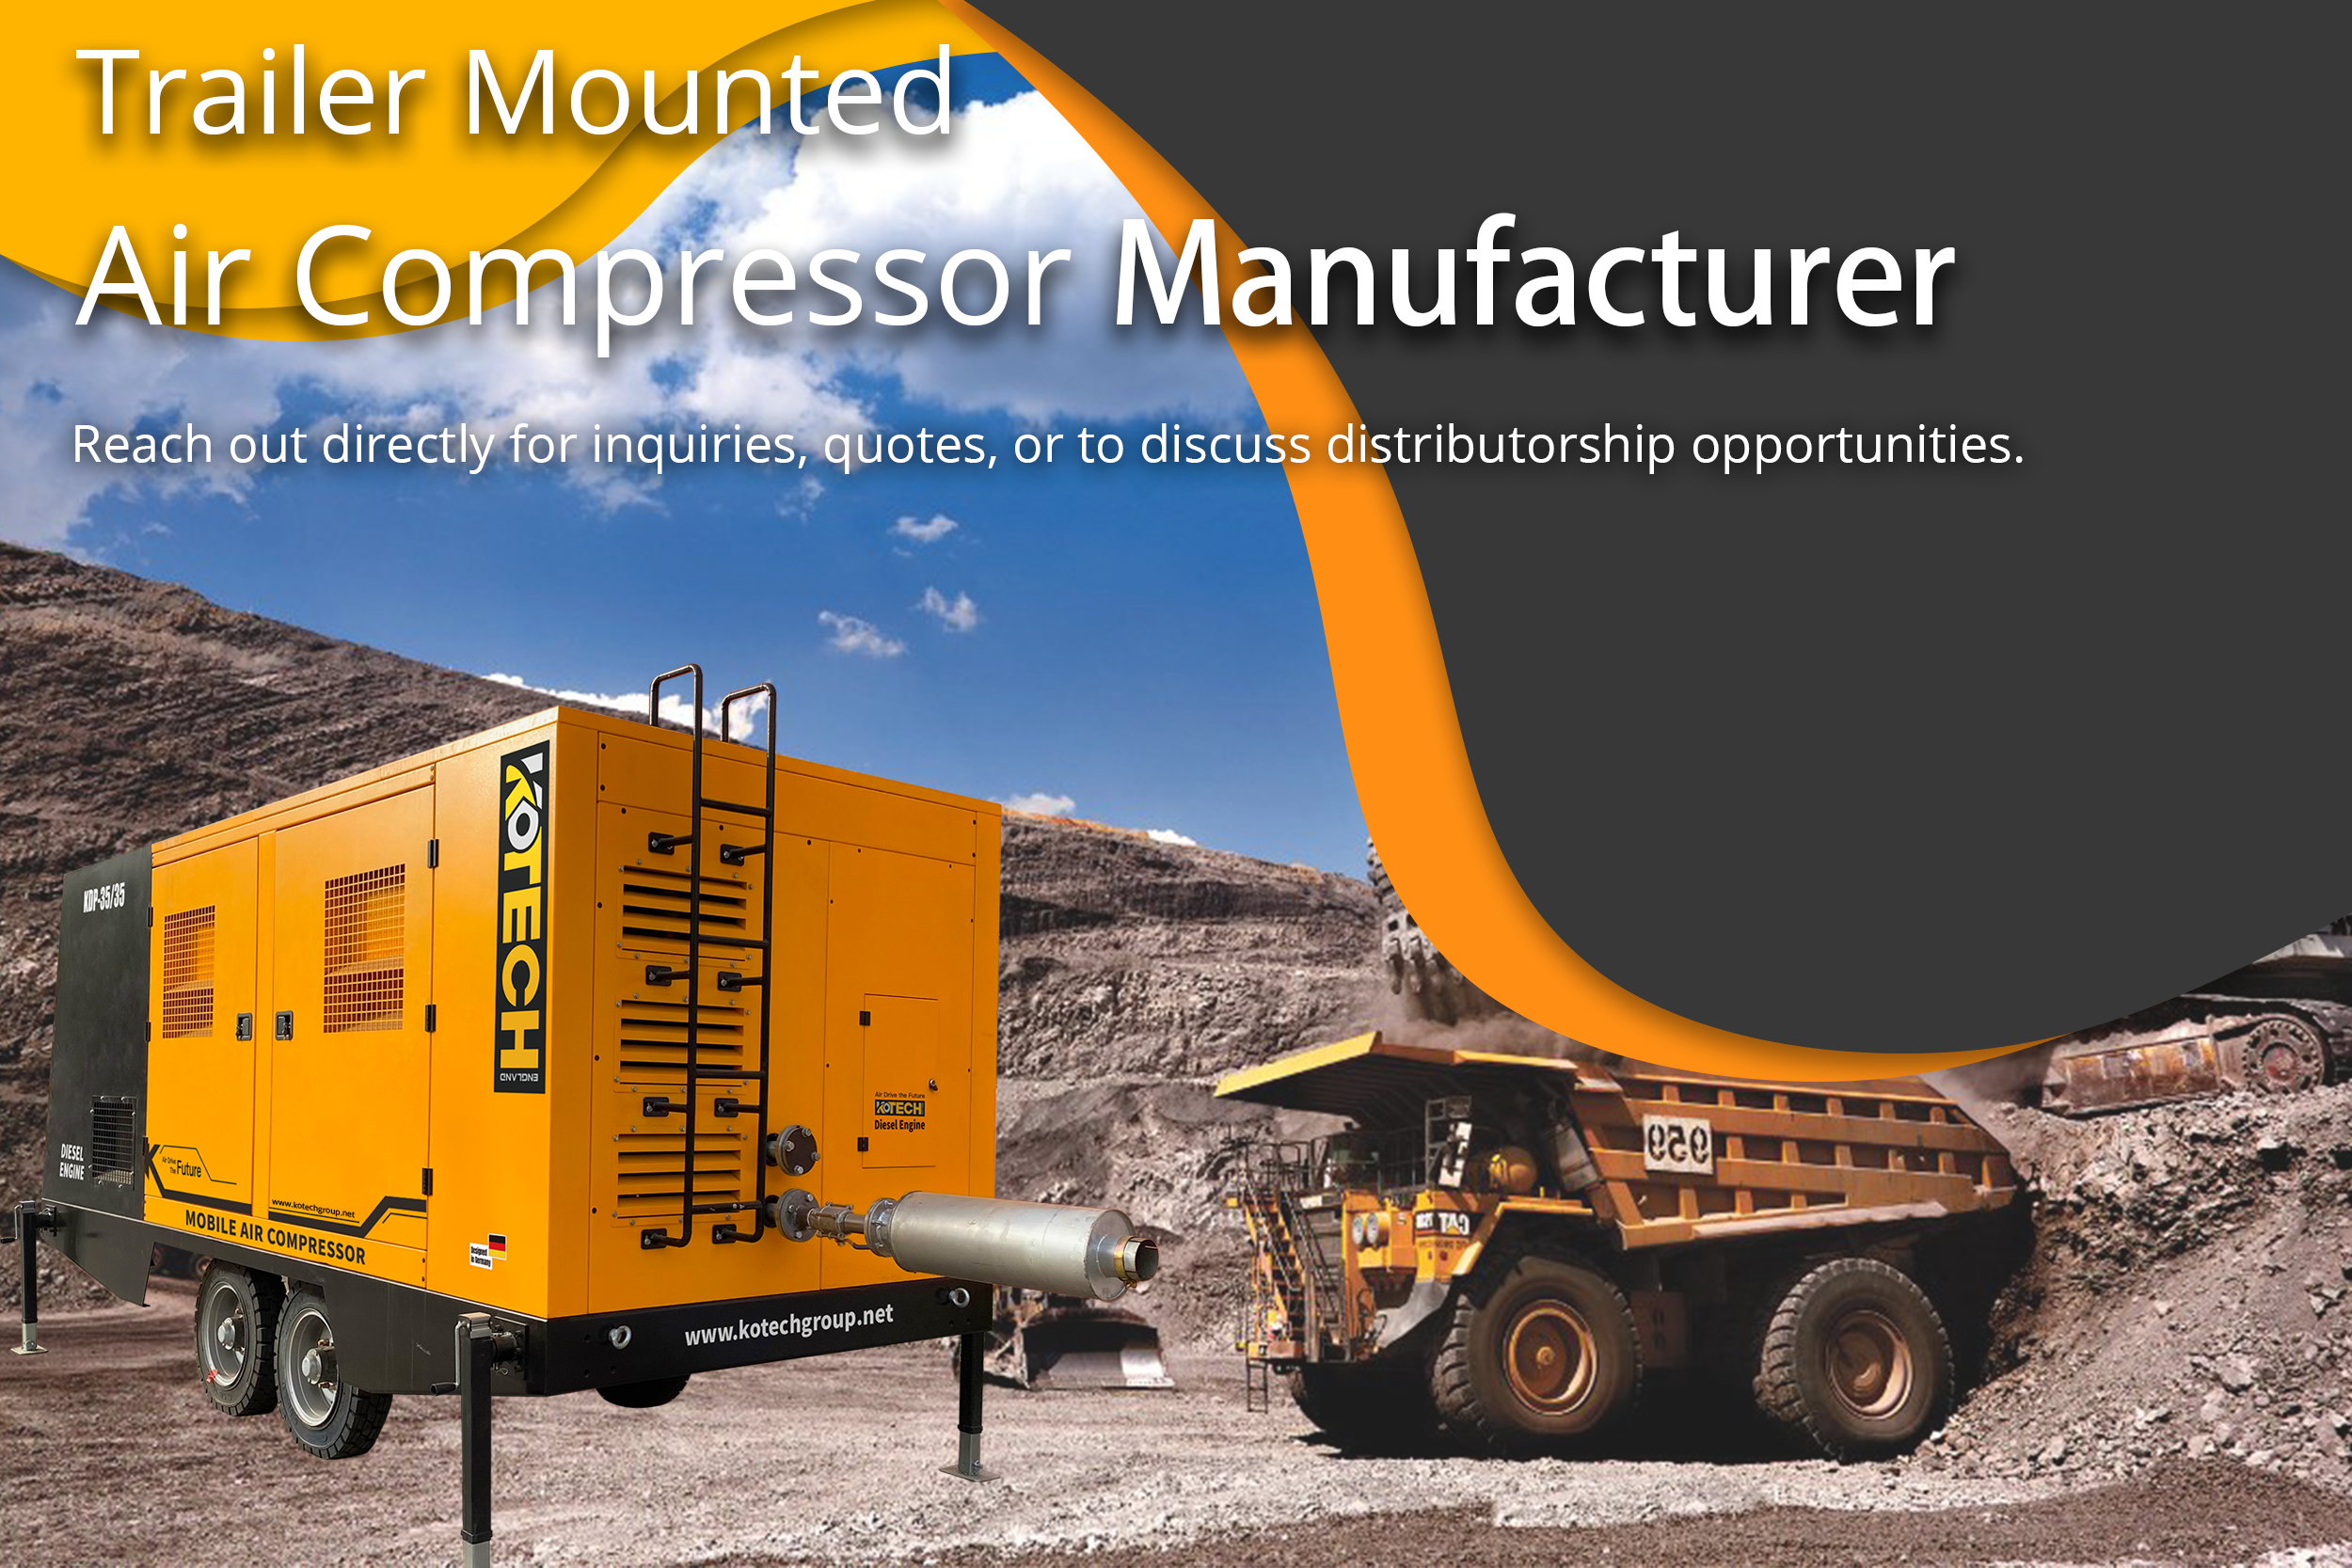 Trailer Mounted Air Compressor Manufacturer